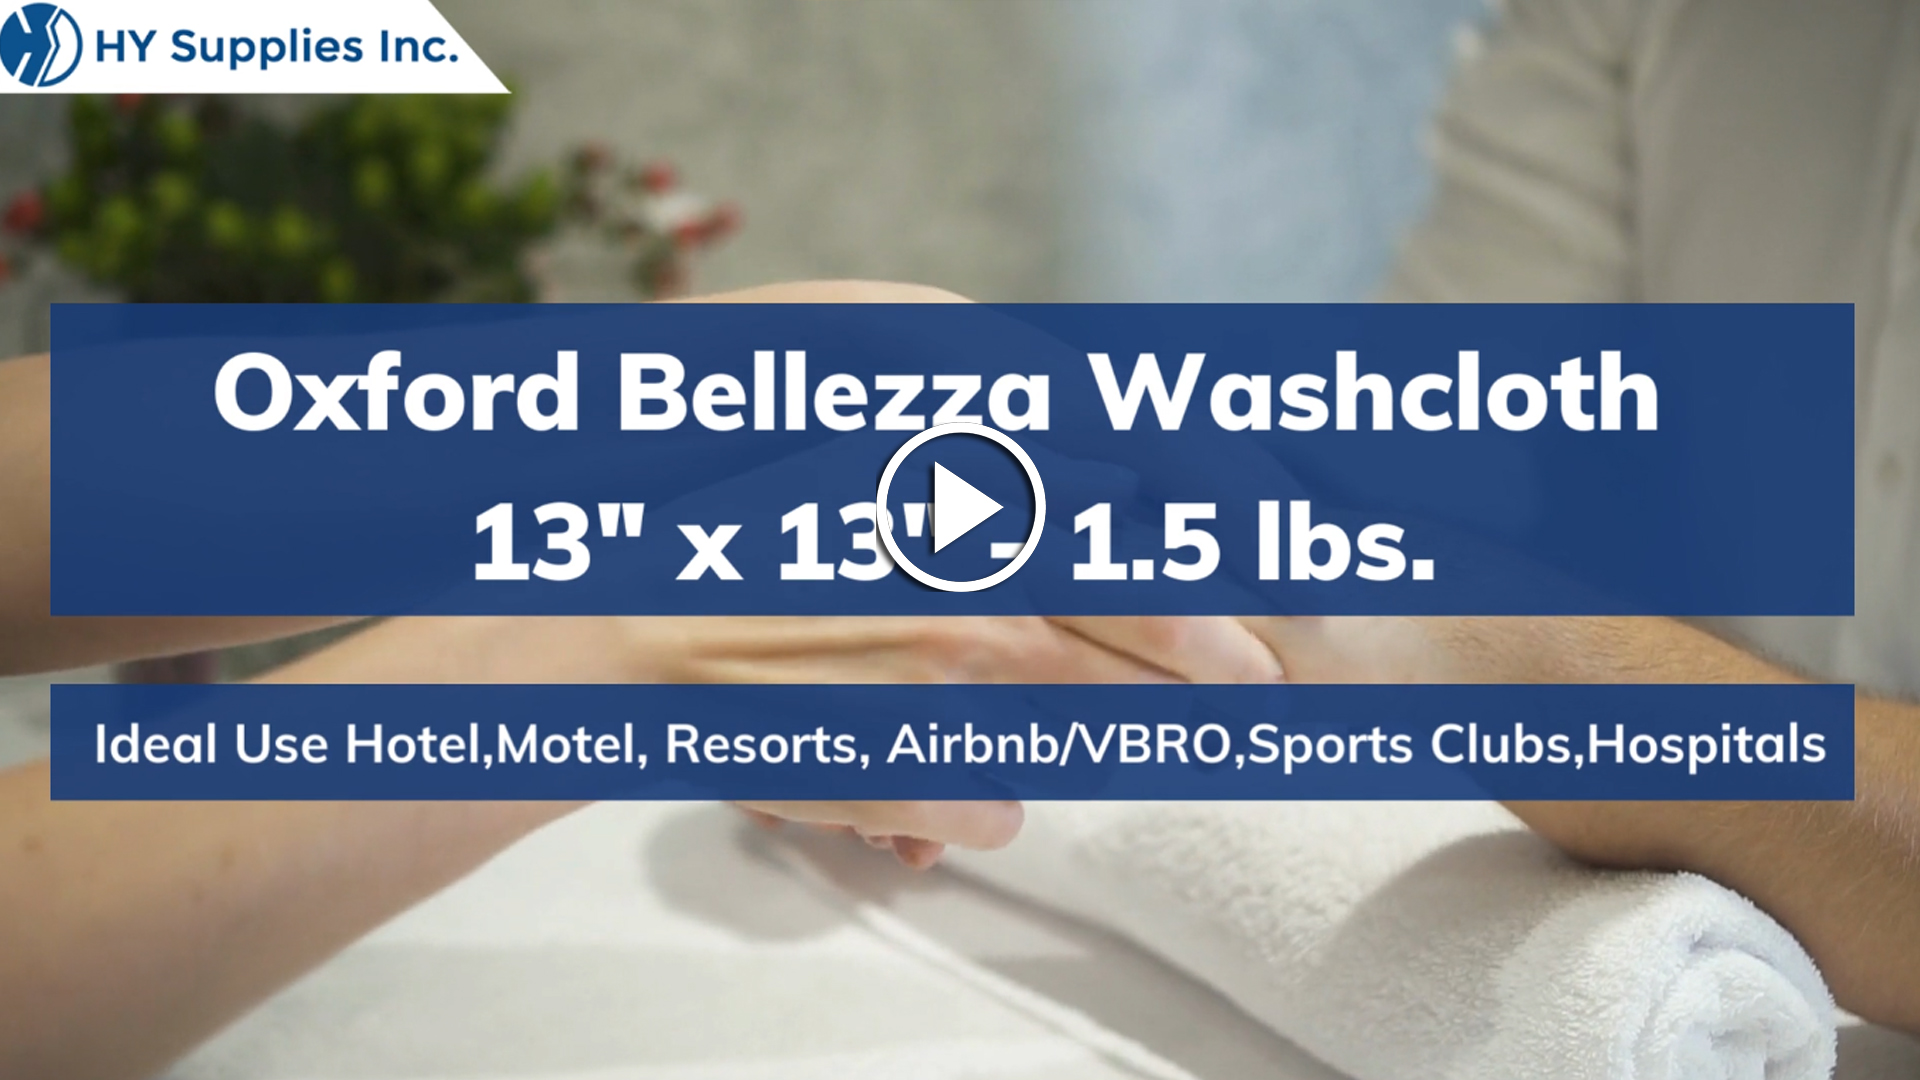 Oxford Bellezza Washcloth - 13"x 13"- 1.5 lbs.